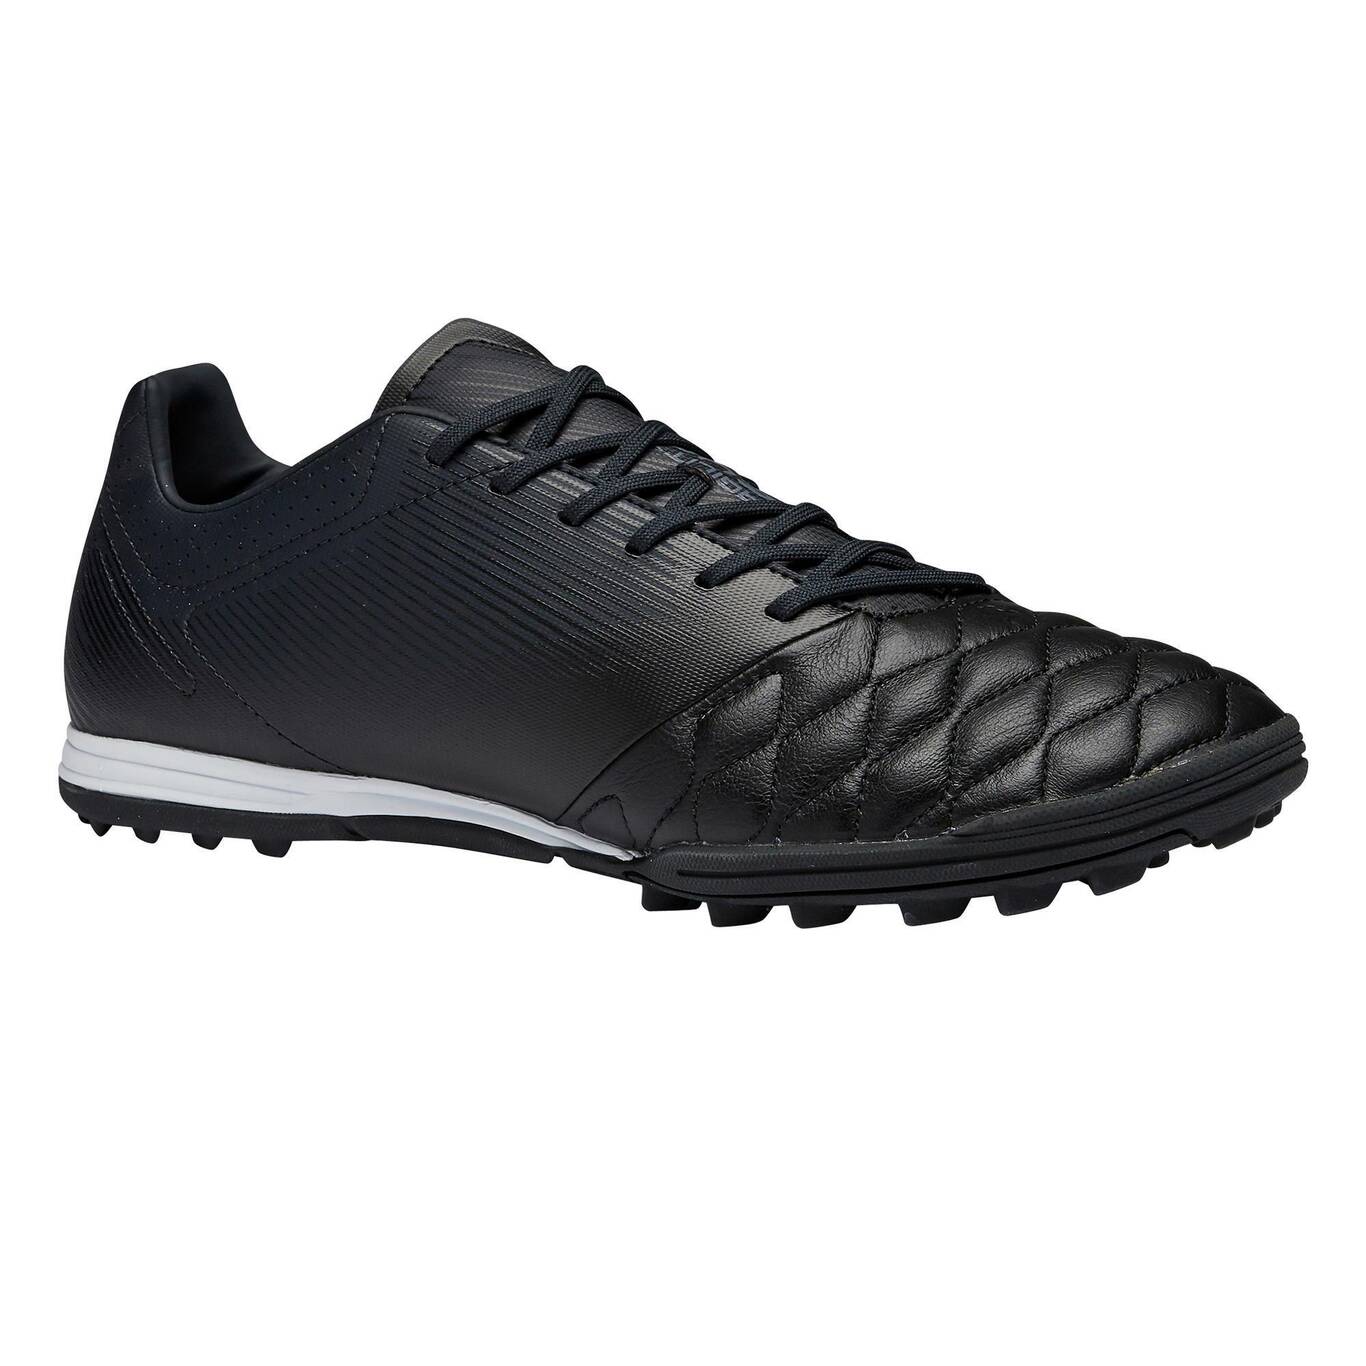 Adult Leather Hard Ground Football Boots Agility 540 - Black